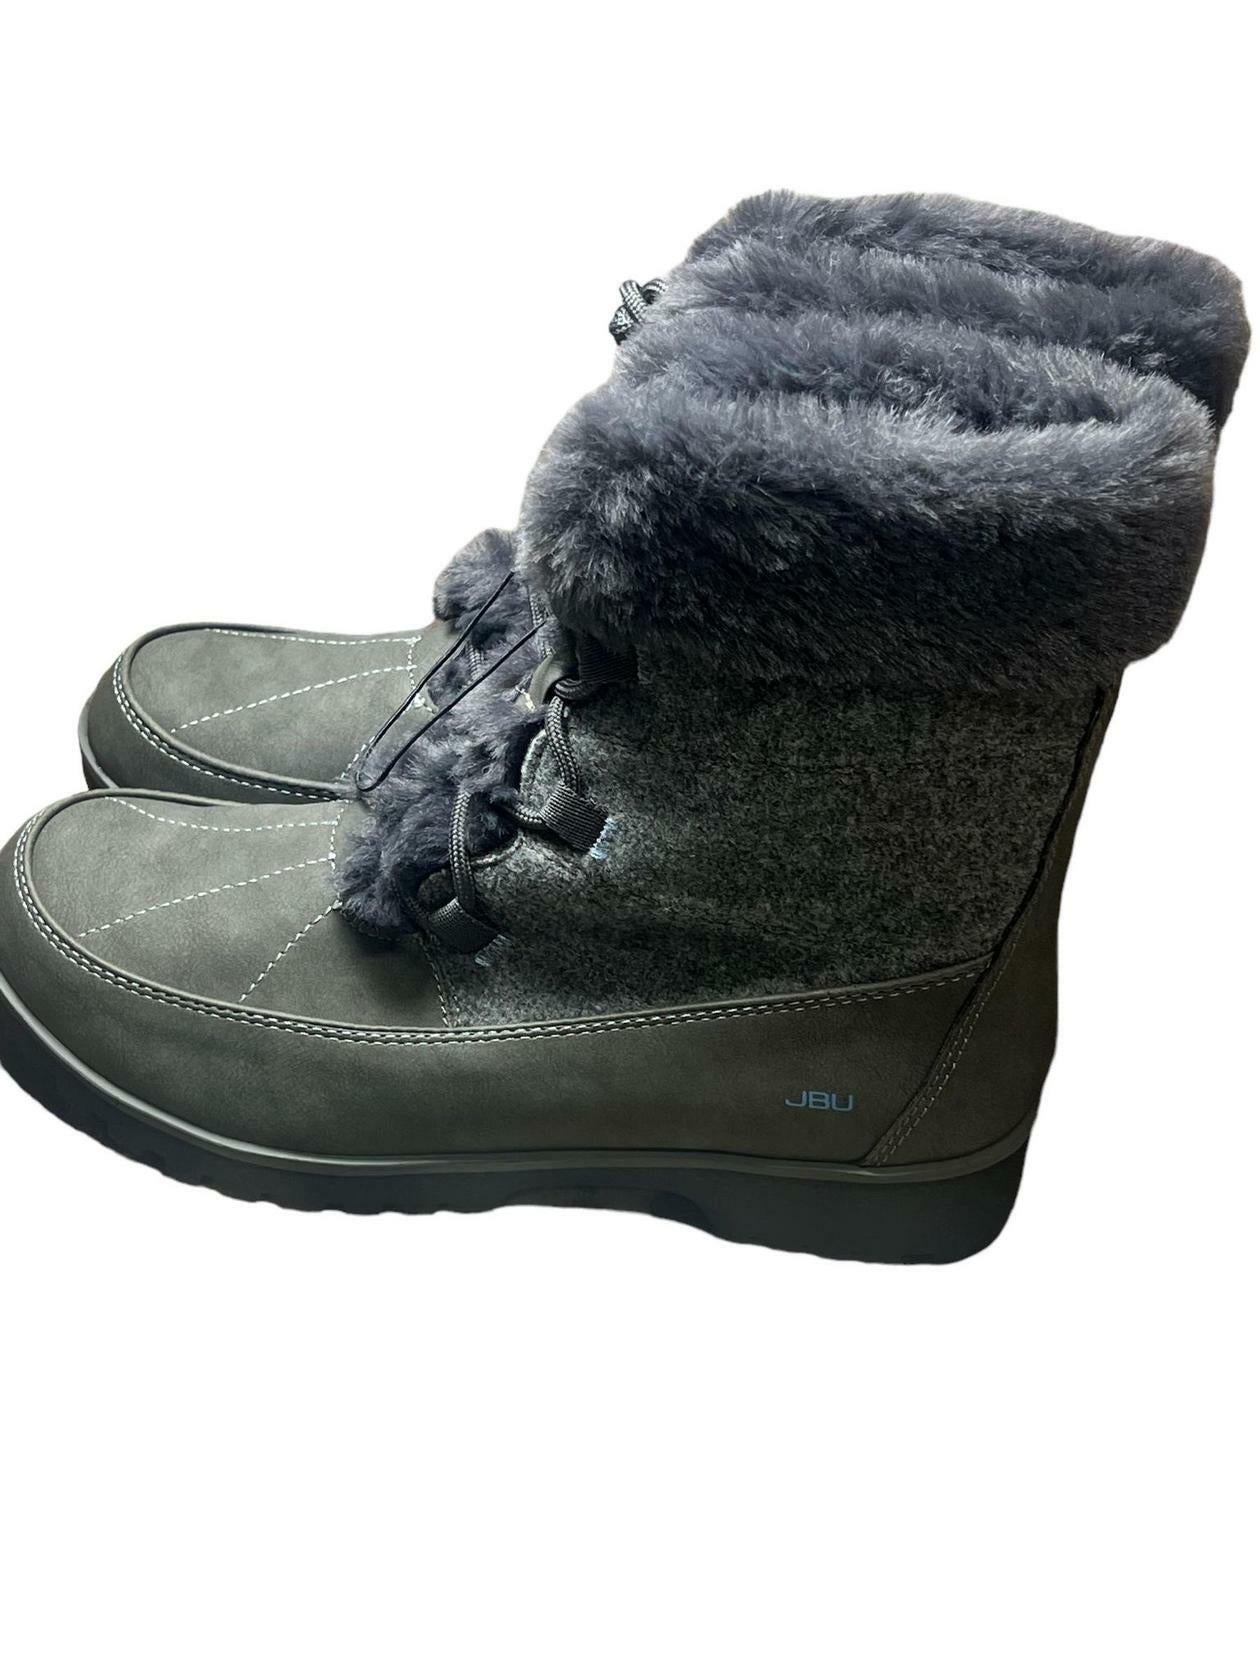 JBU Colorado Dark Grey Boots - Size 9 Ladies